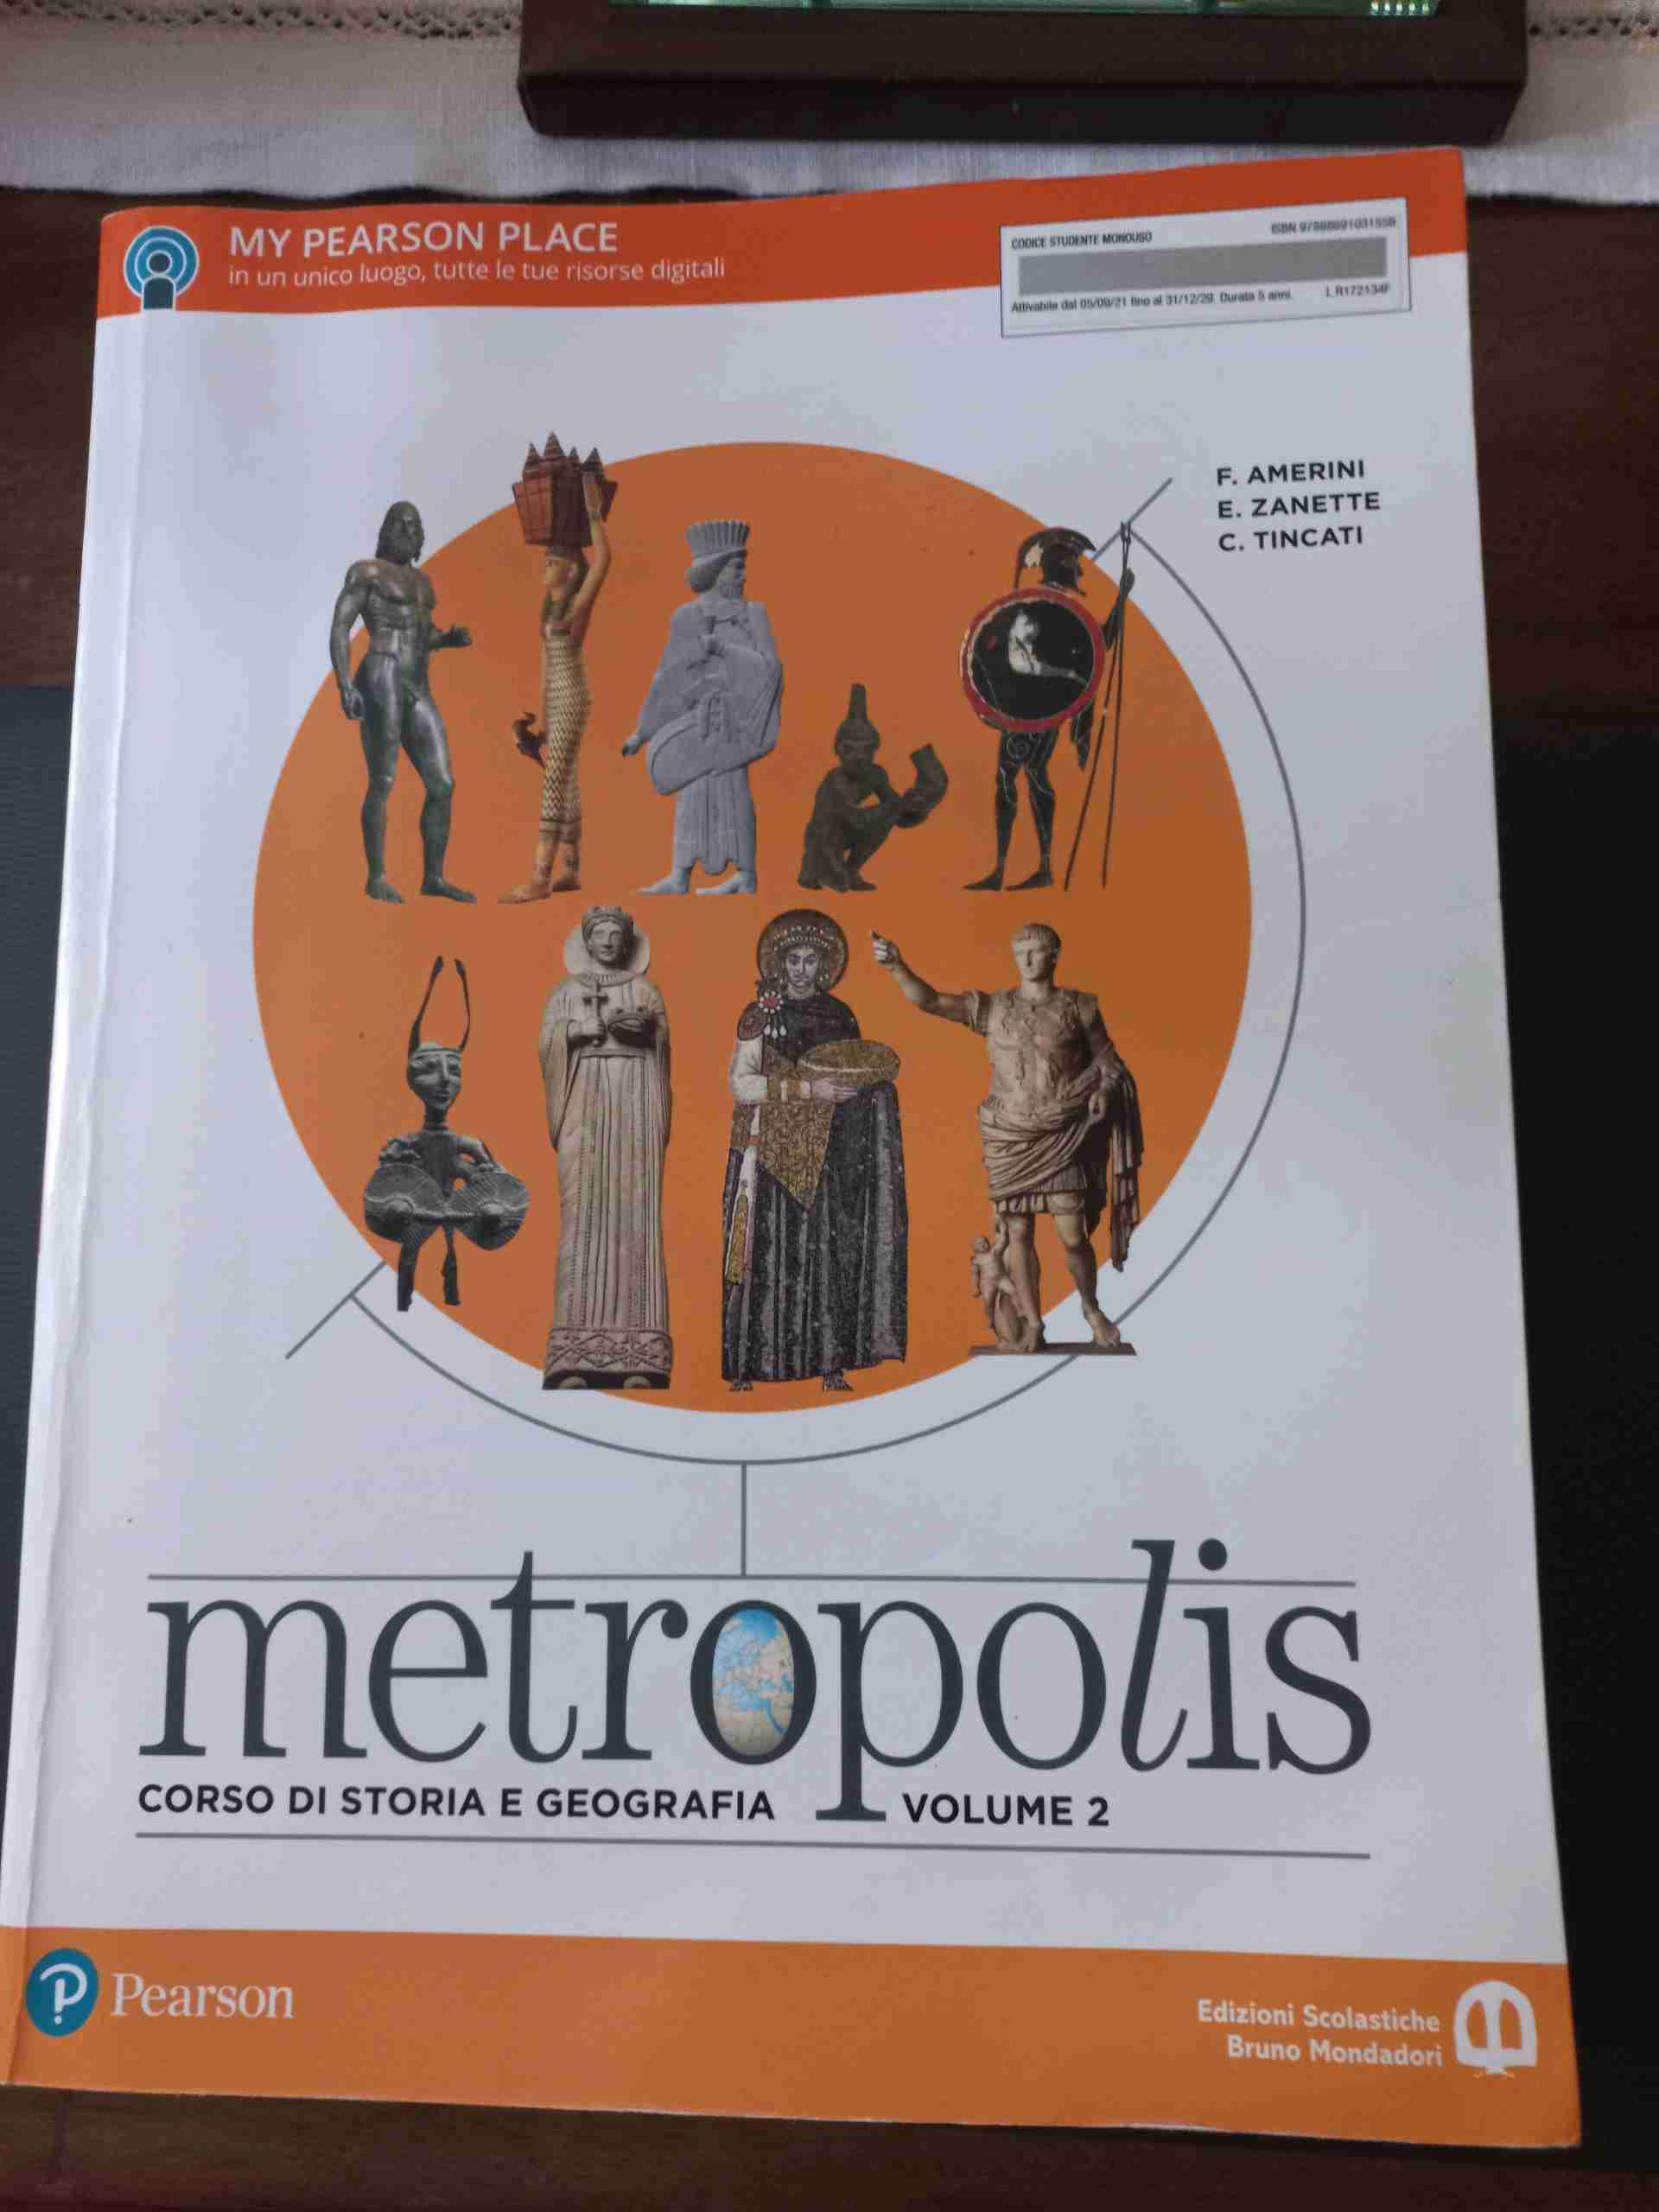 Metropolis volume 2